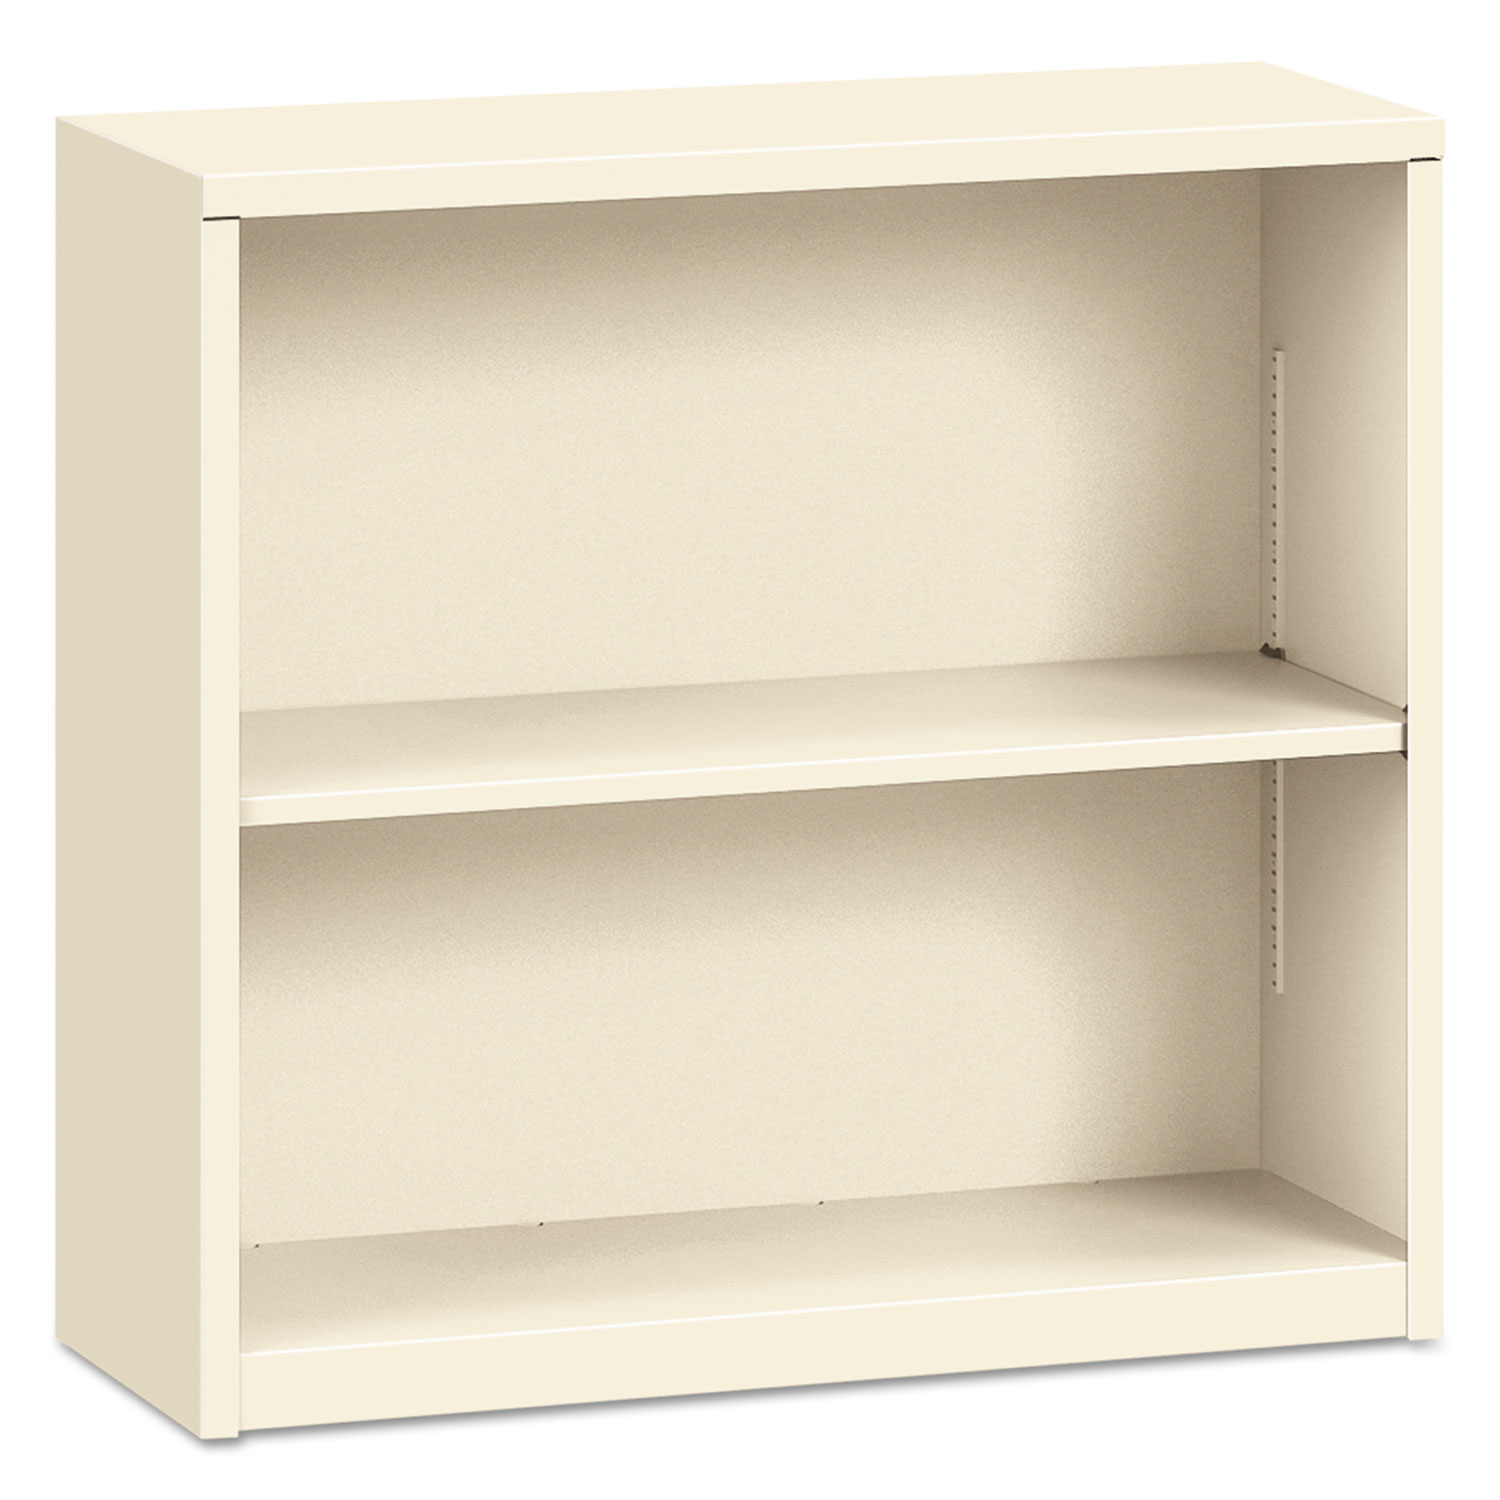 Two shelves. Картинка с двумя полками. Shelf 1*2. Two Shelves 3d.